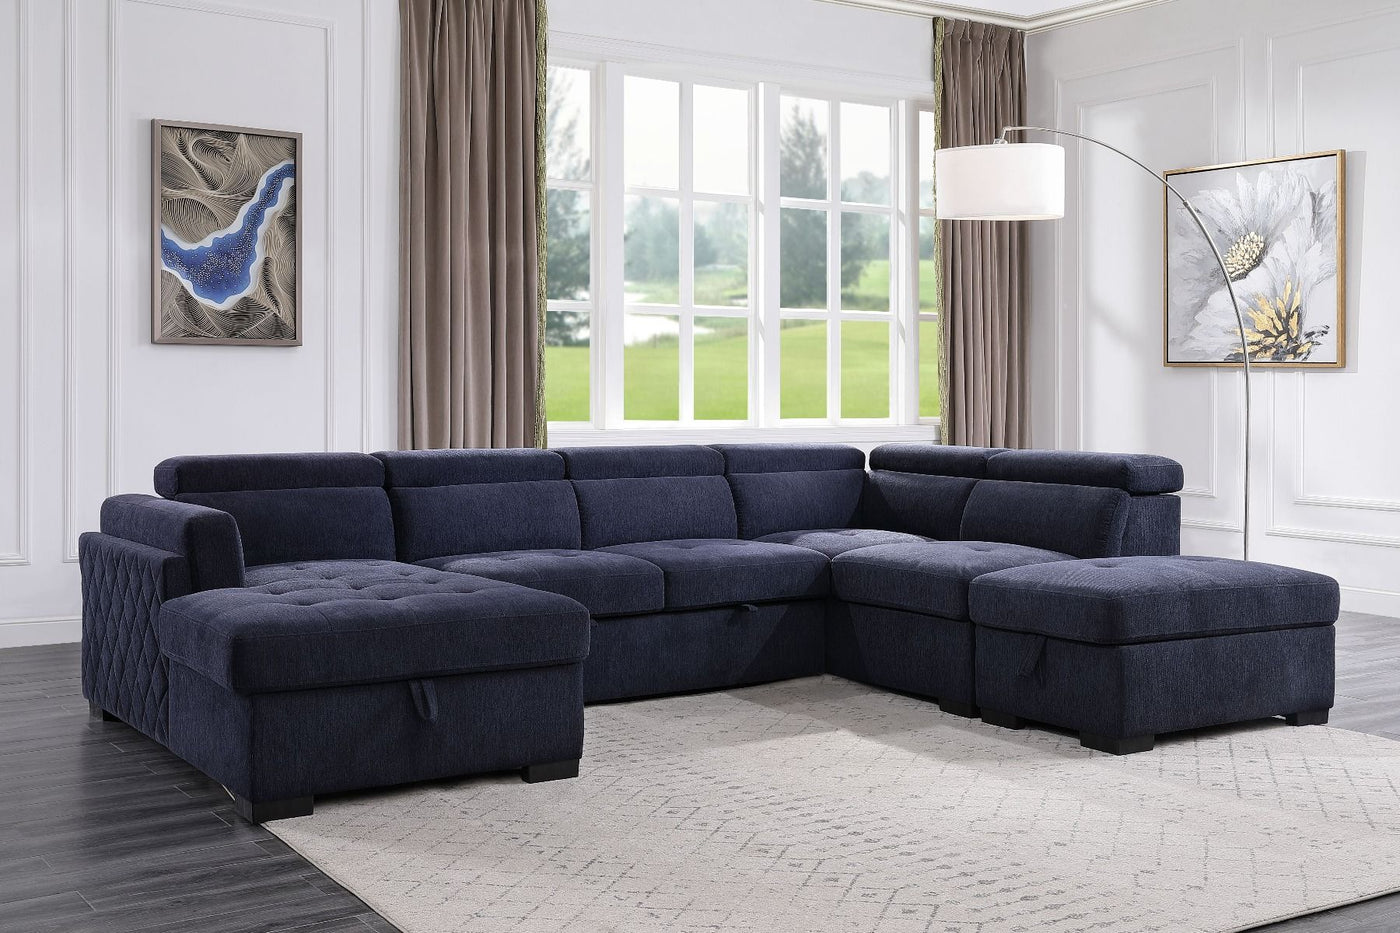 Nekoda Navy Storage Sleeper Sectional Sofa And Ottoman Blue Fully Furnished